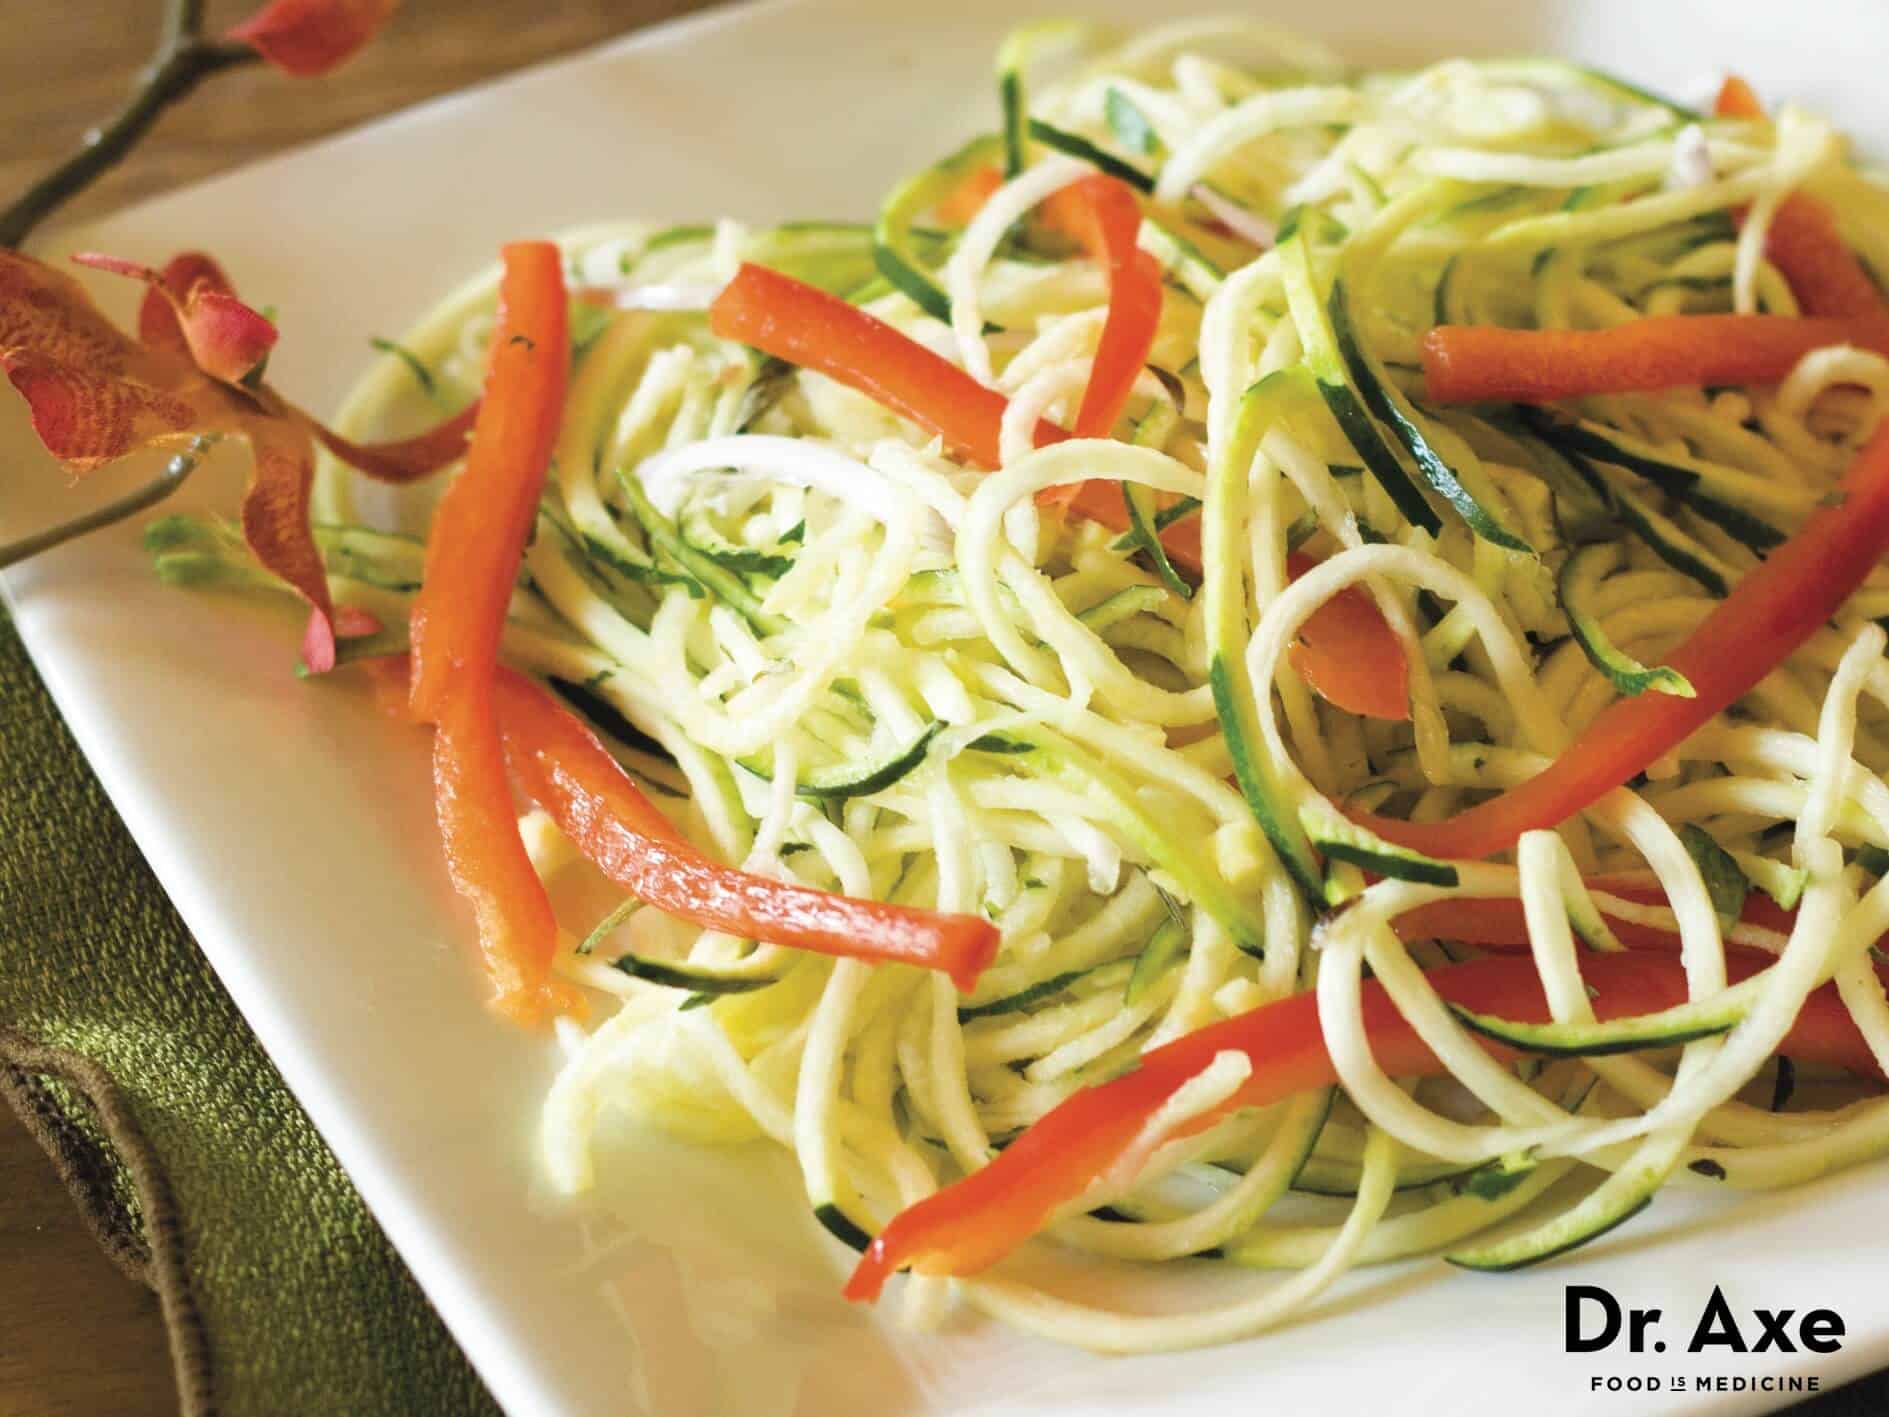 Zucchini noodles with marinara sauce recipe - Dr. Axe